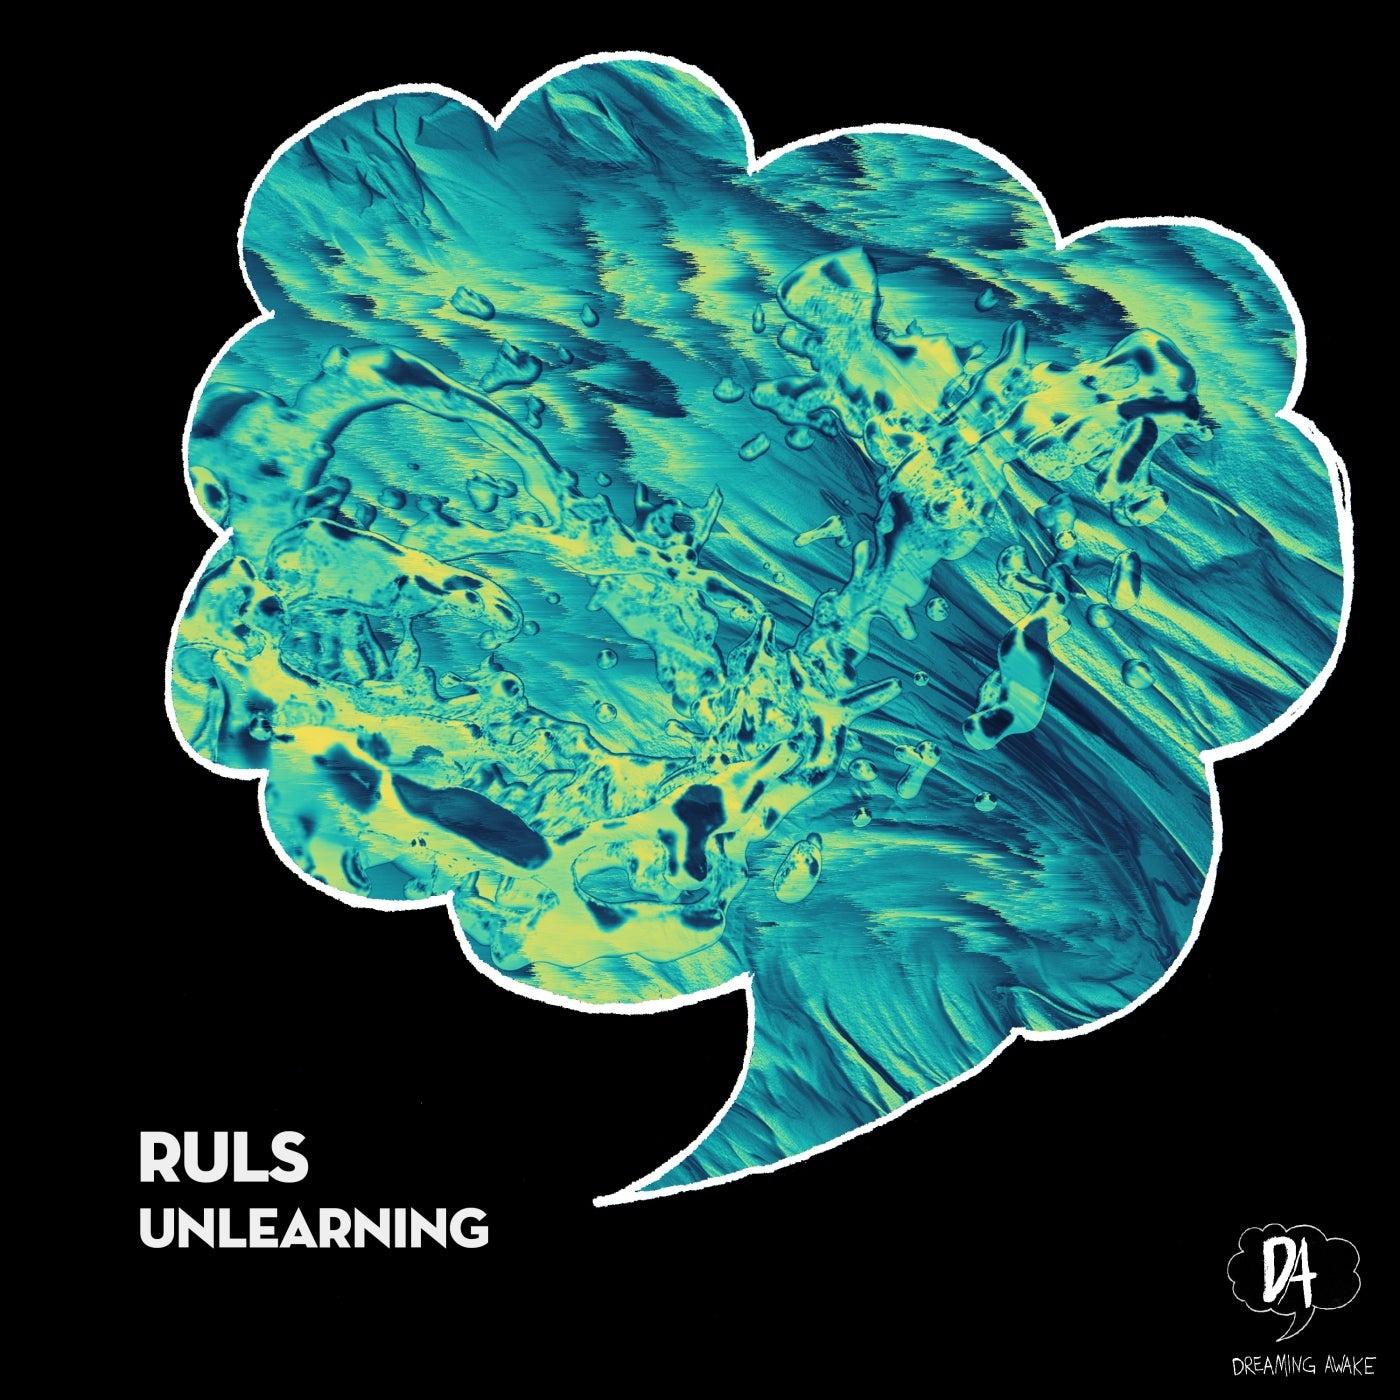 Ruls - Unlearning [DAK020]